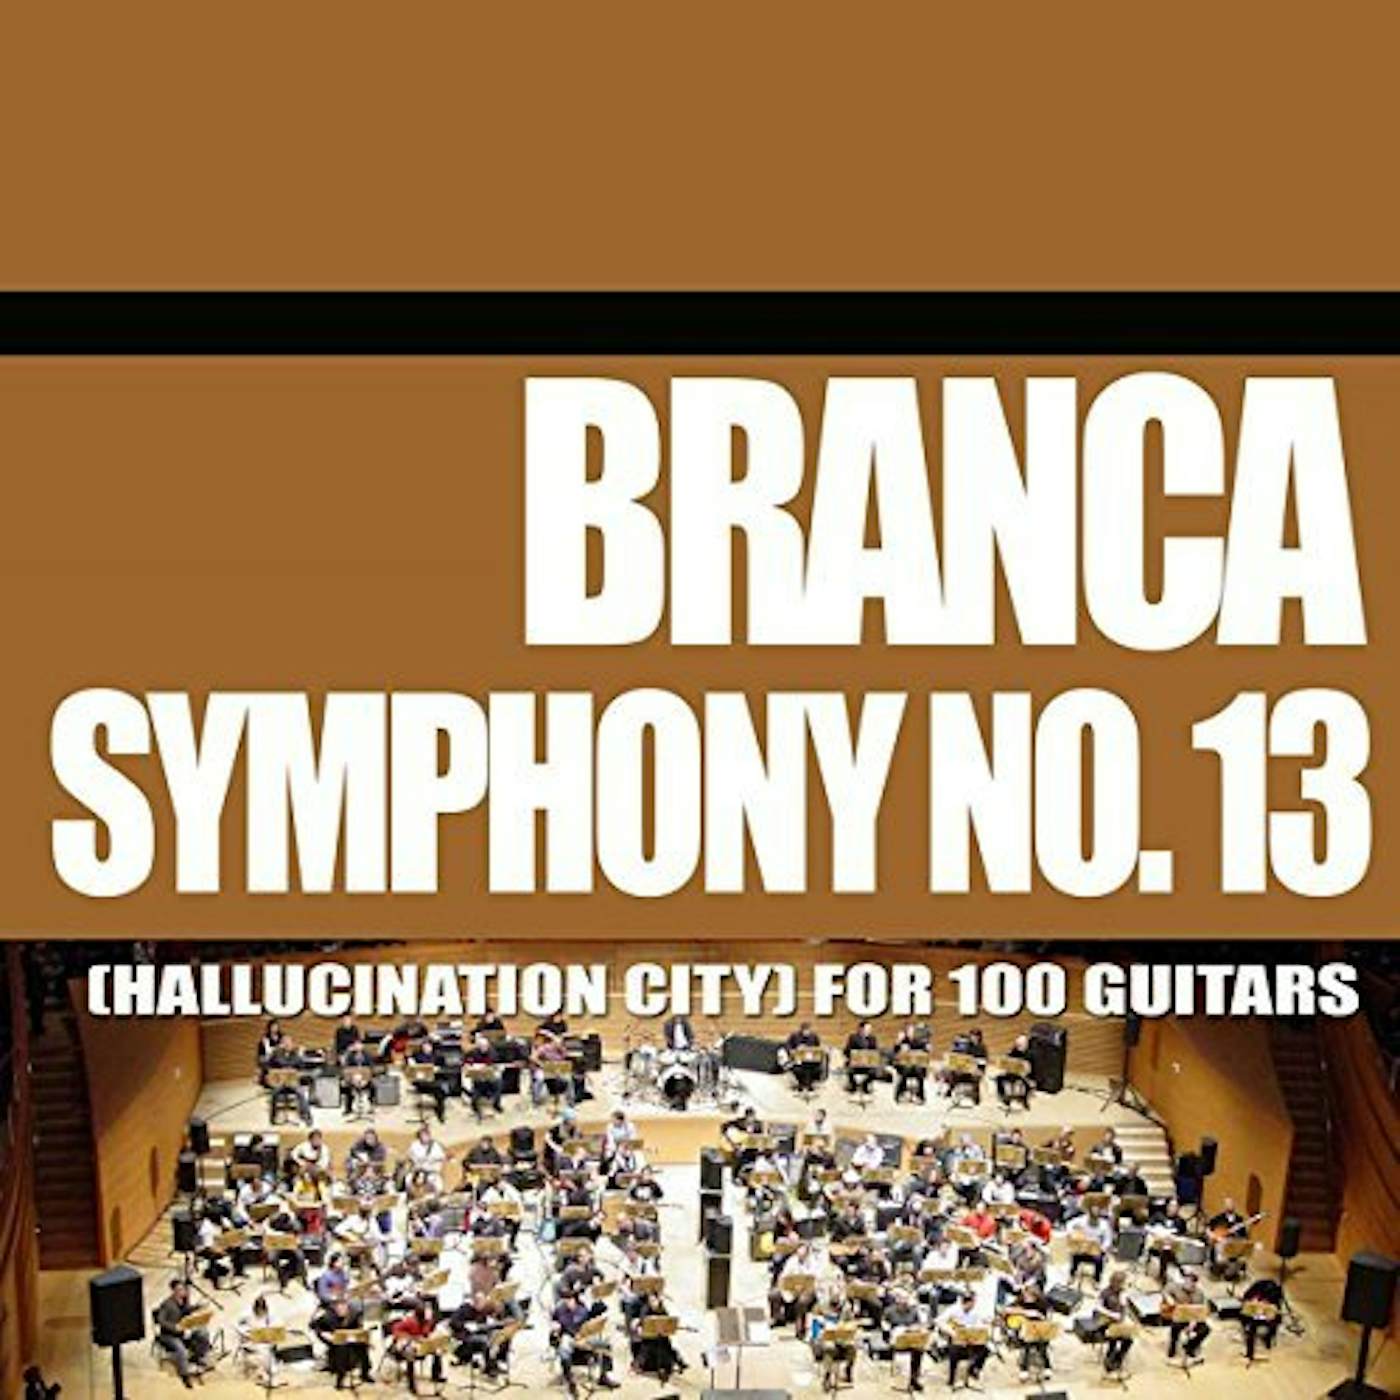 Glenn Branca SYMPHONY 13 (HALLUCINATION CITY) FOR 100 GUITARS CD